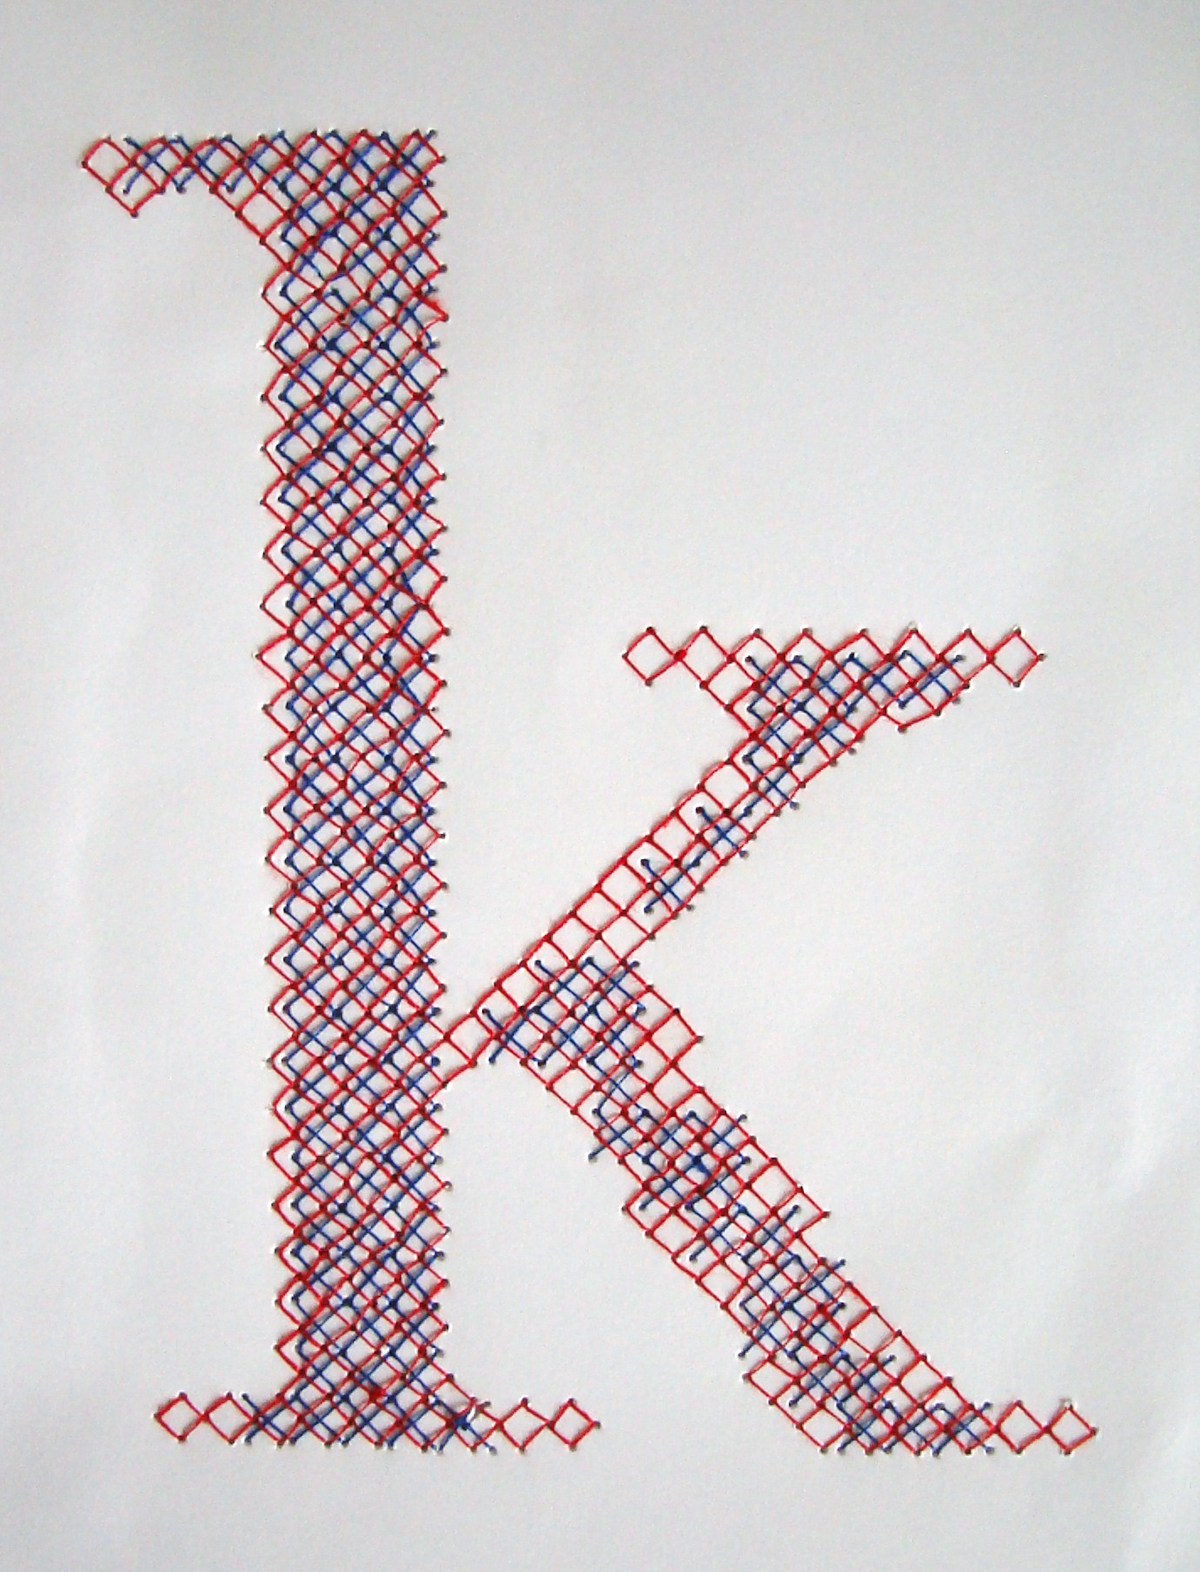 sewing stitching alphabet Georgia